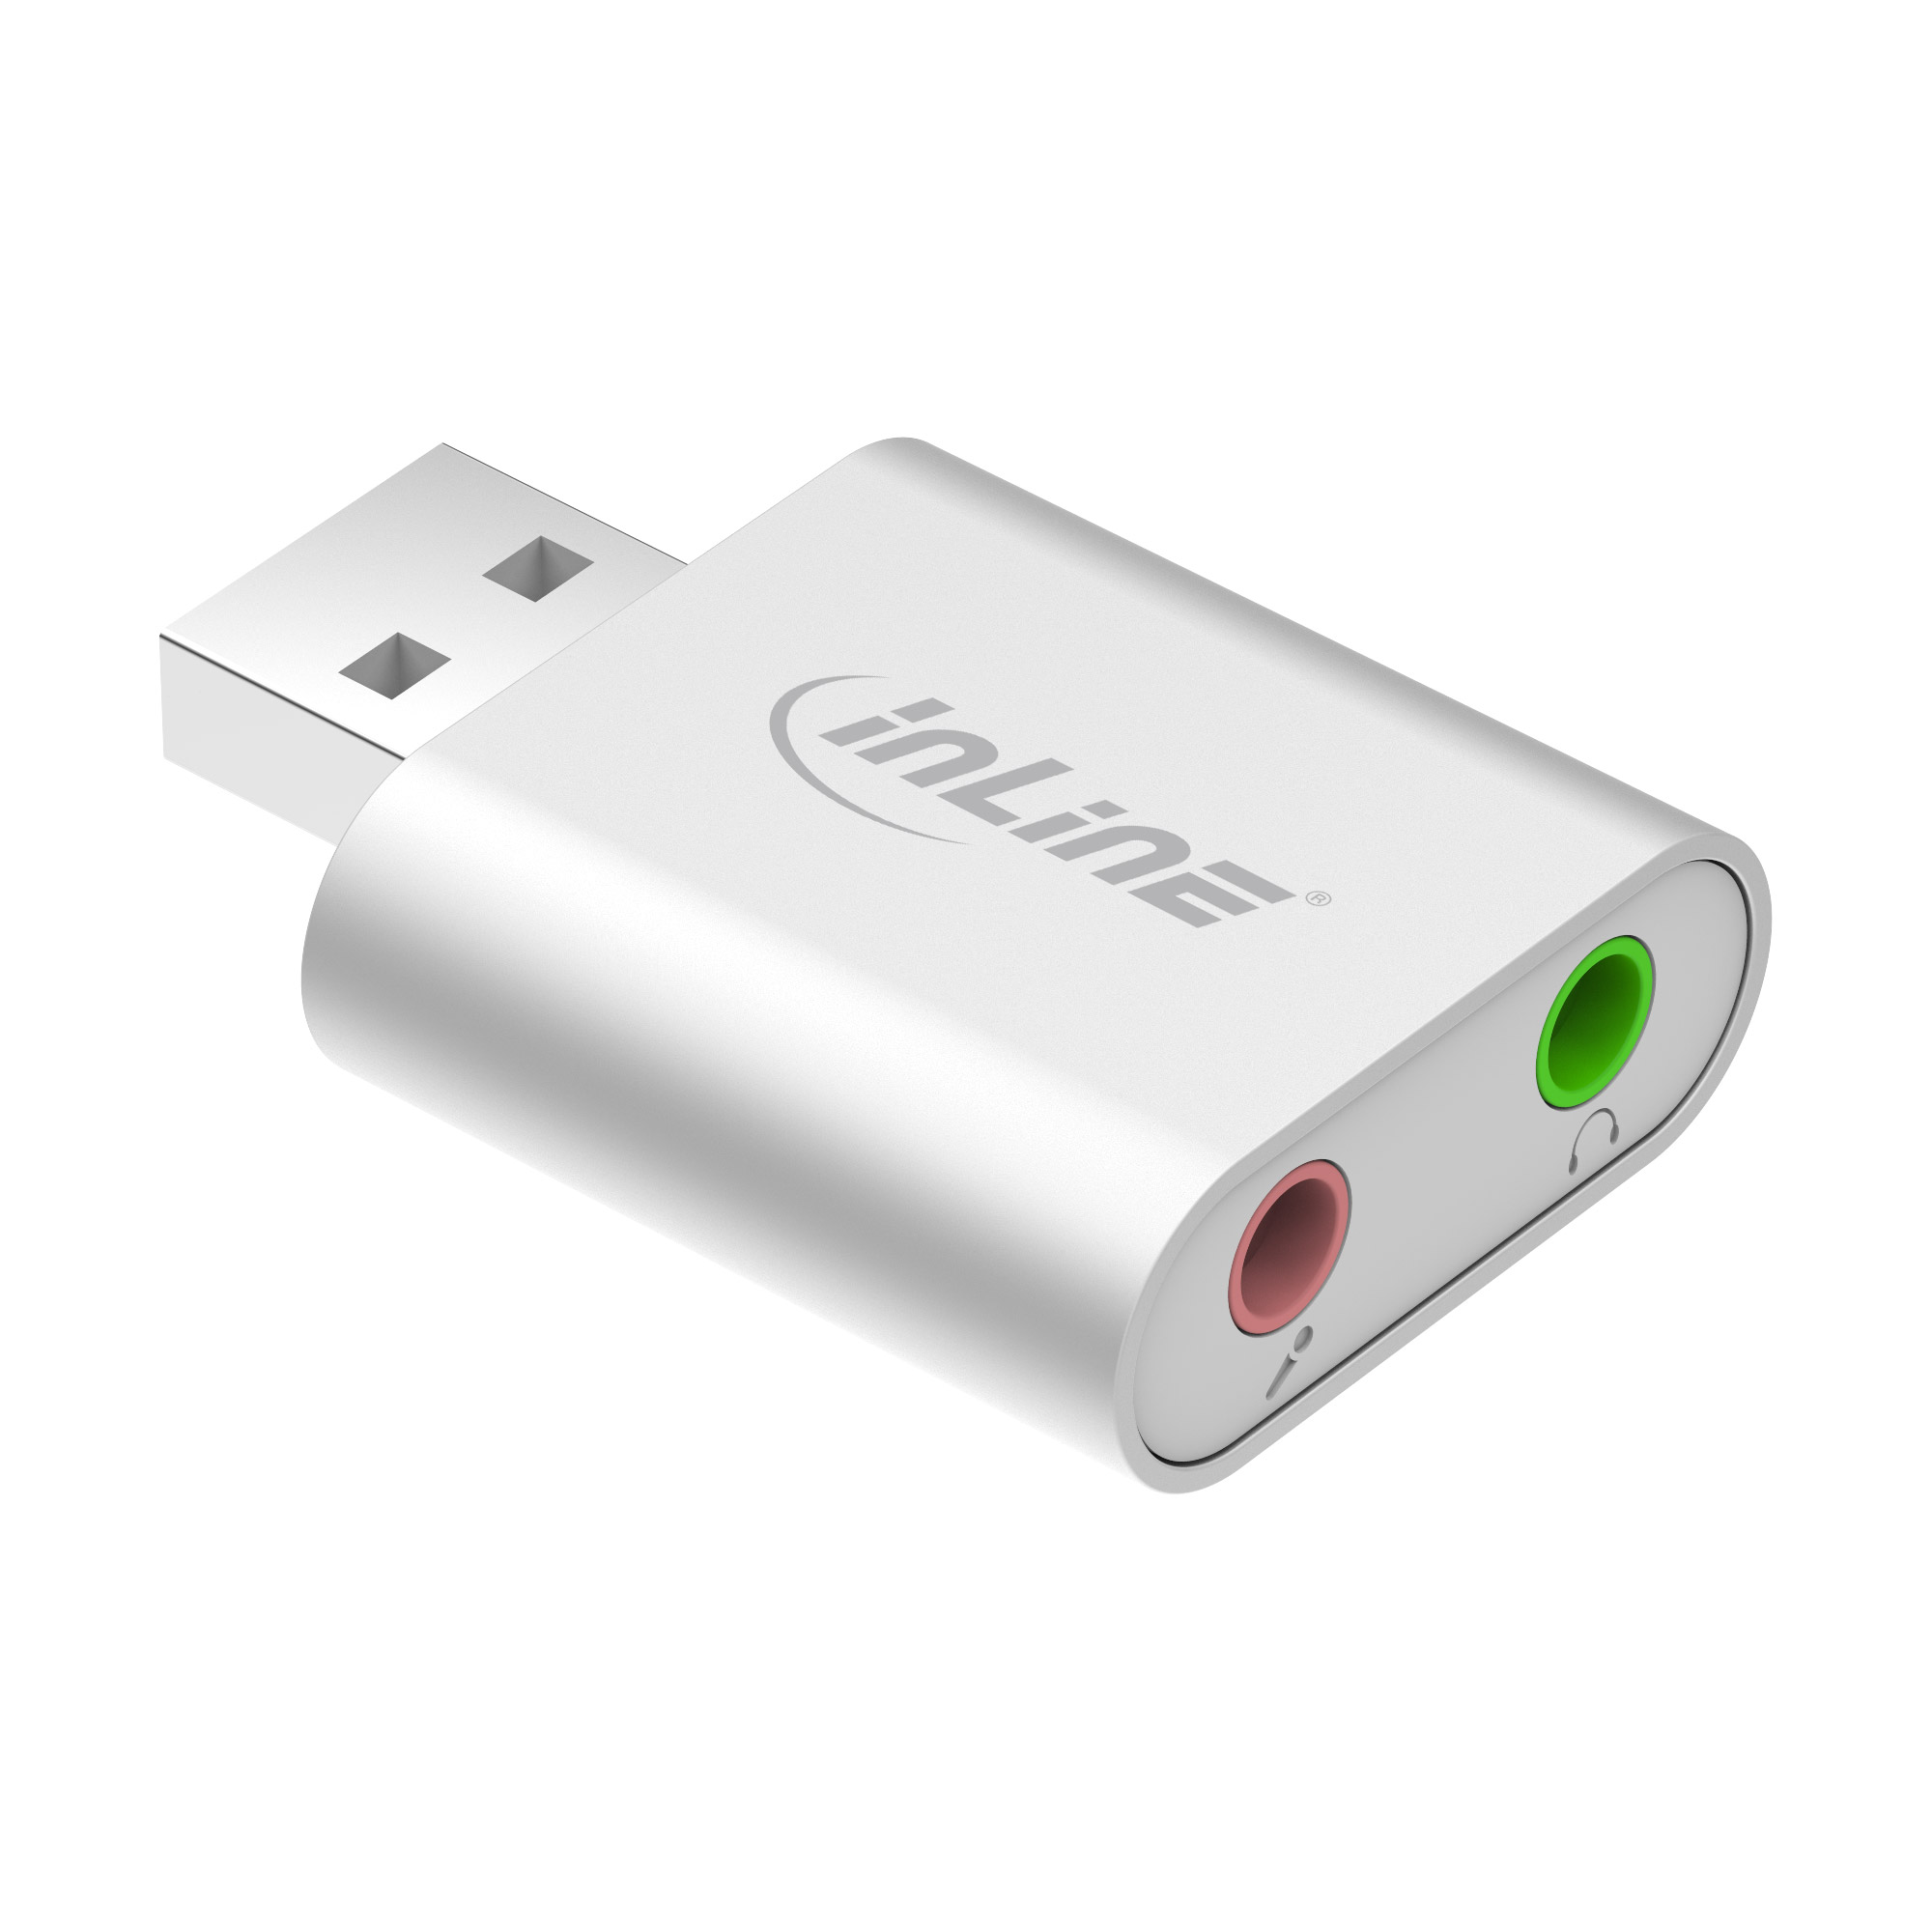 InLine® USB Audio Soundadapter, Mini Aluminium Gehäuse